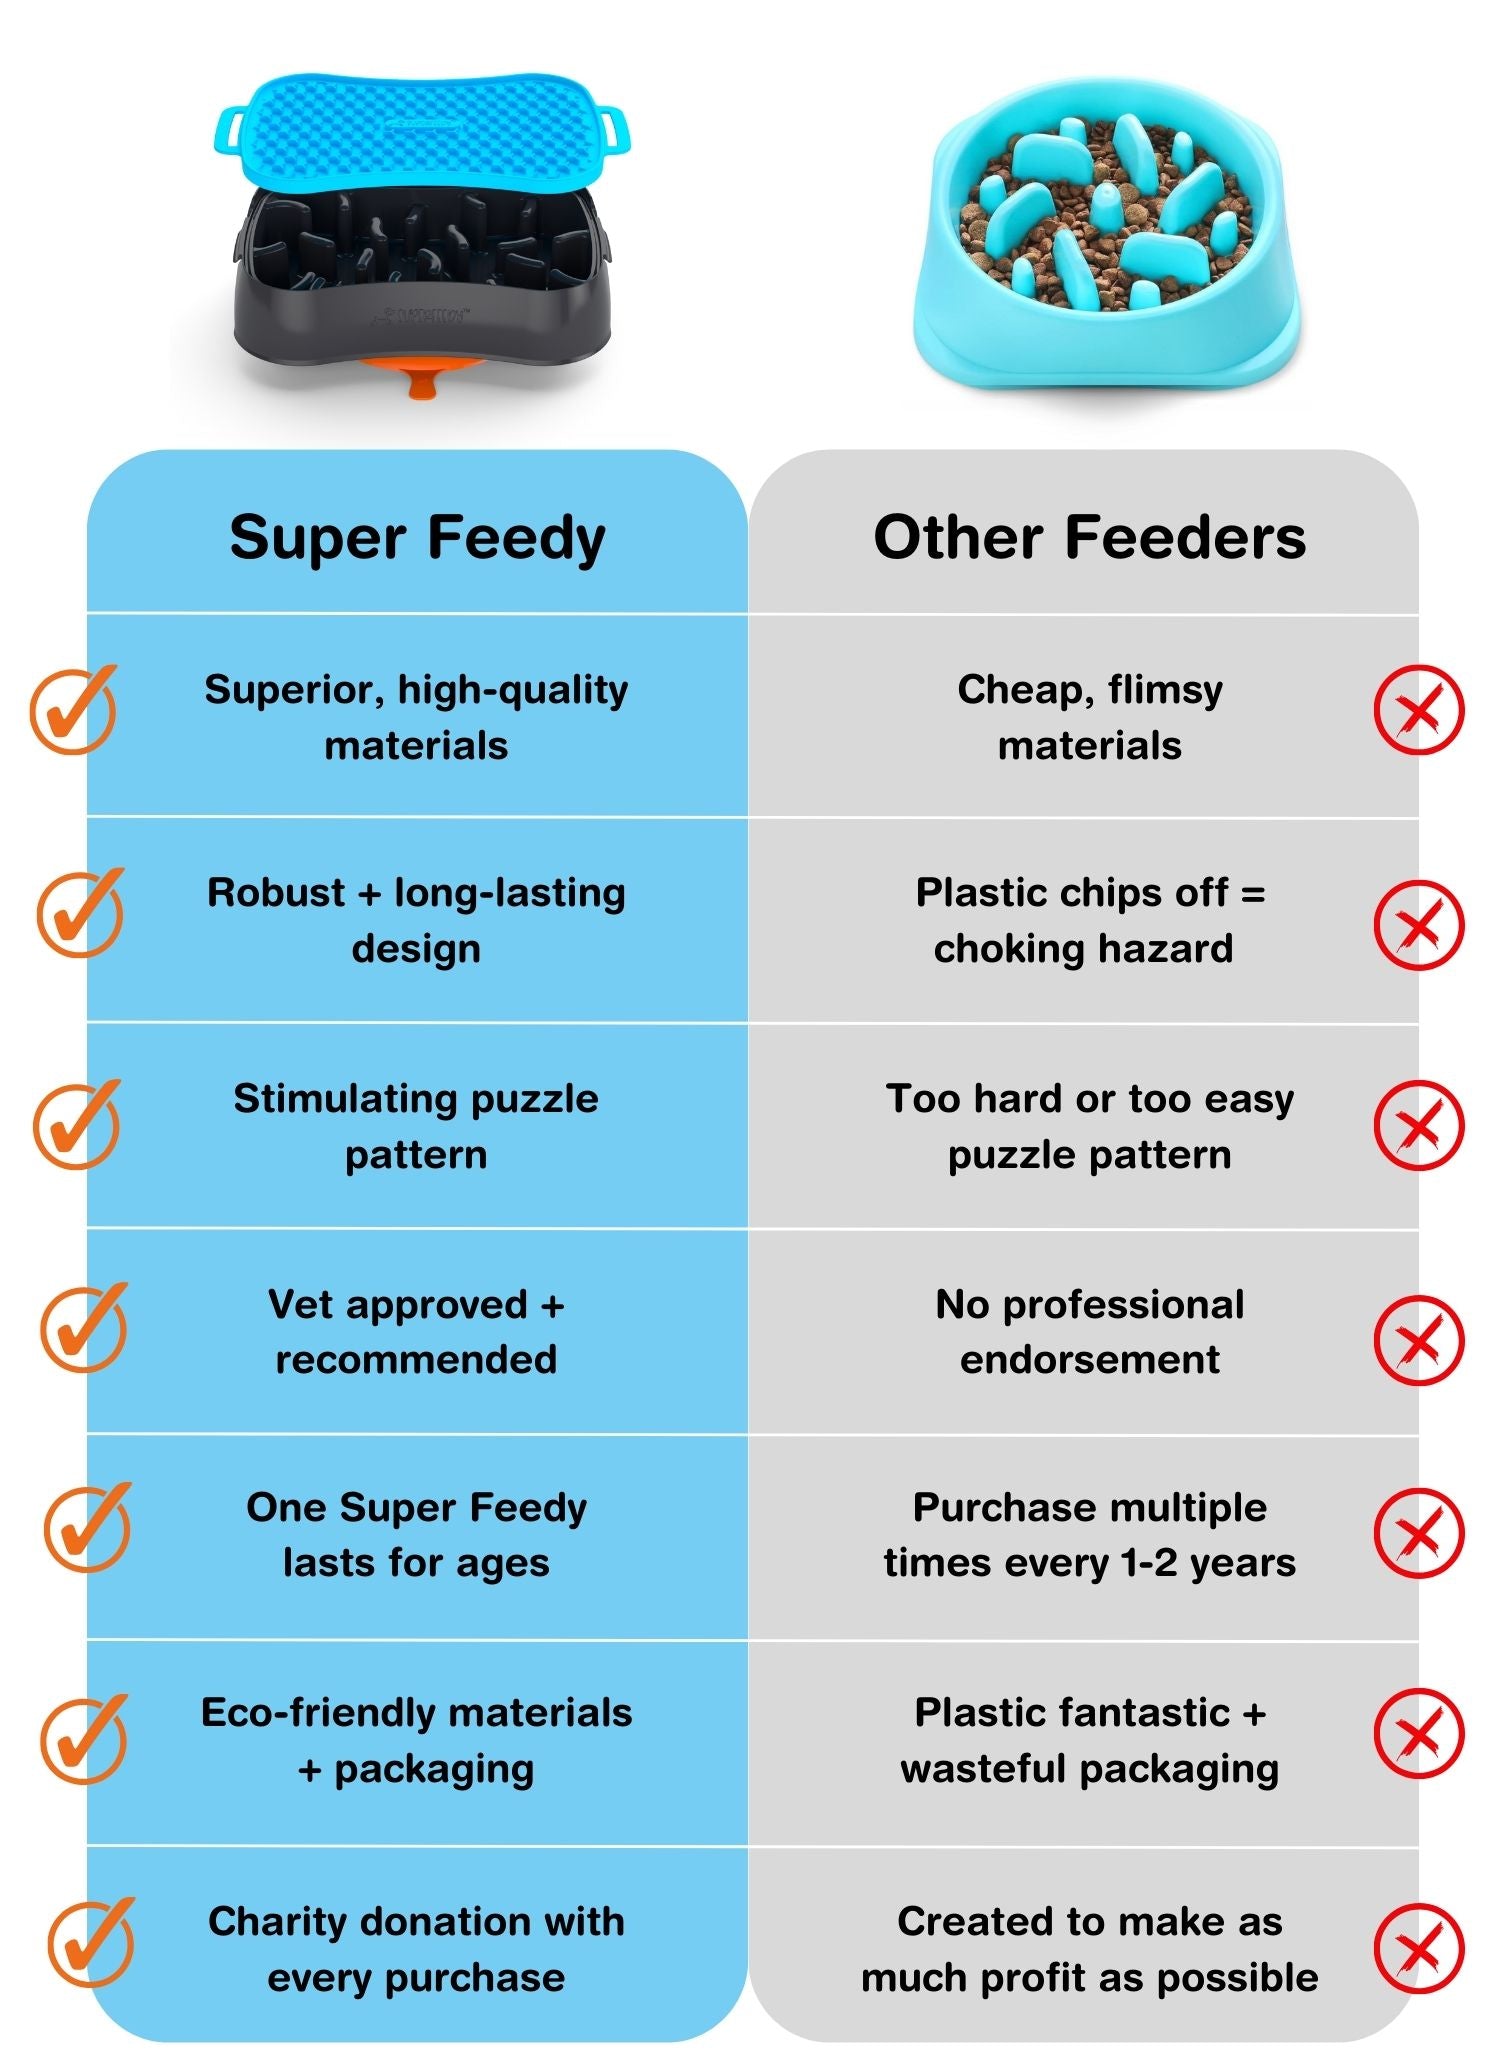 Super Feedy vs Other Feeders